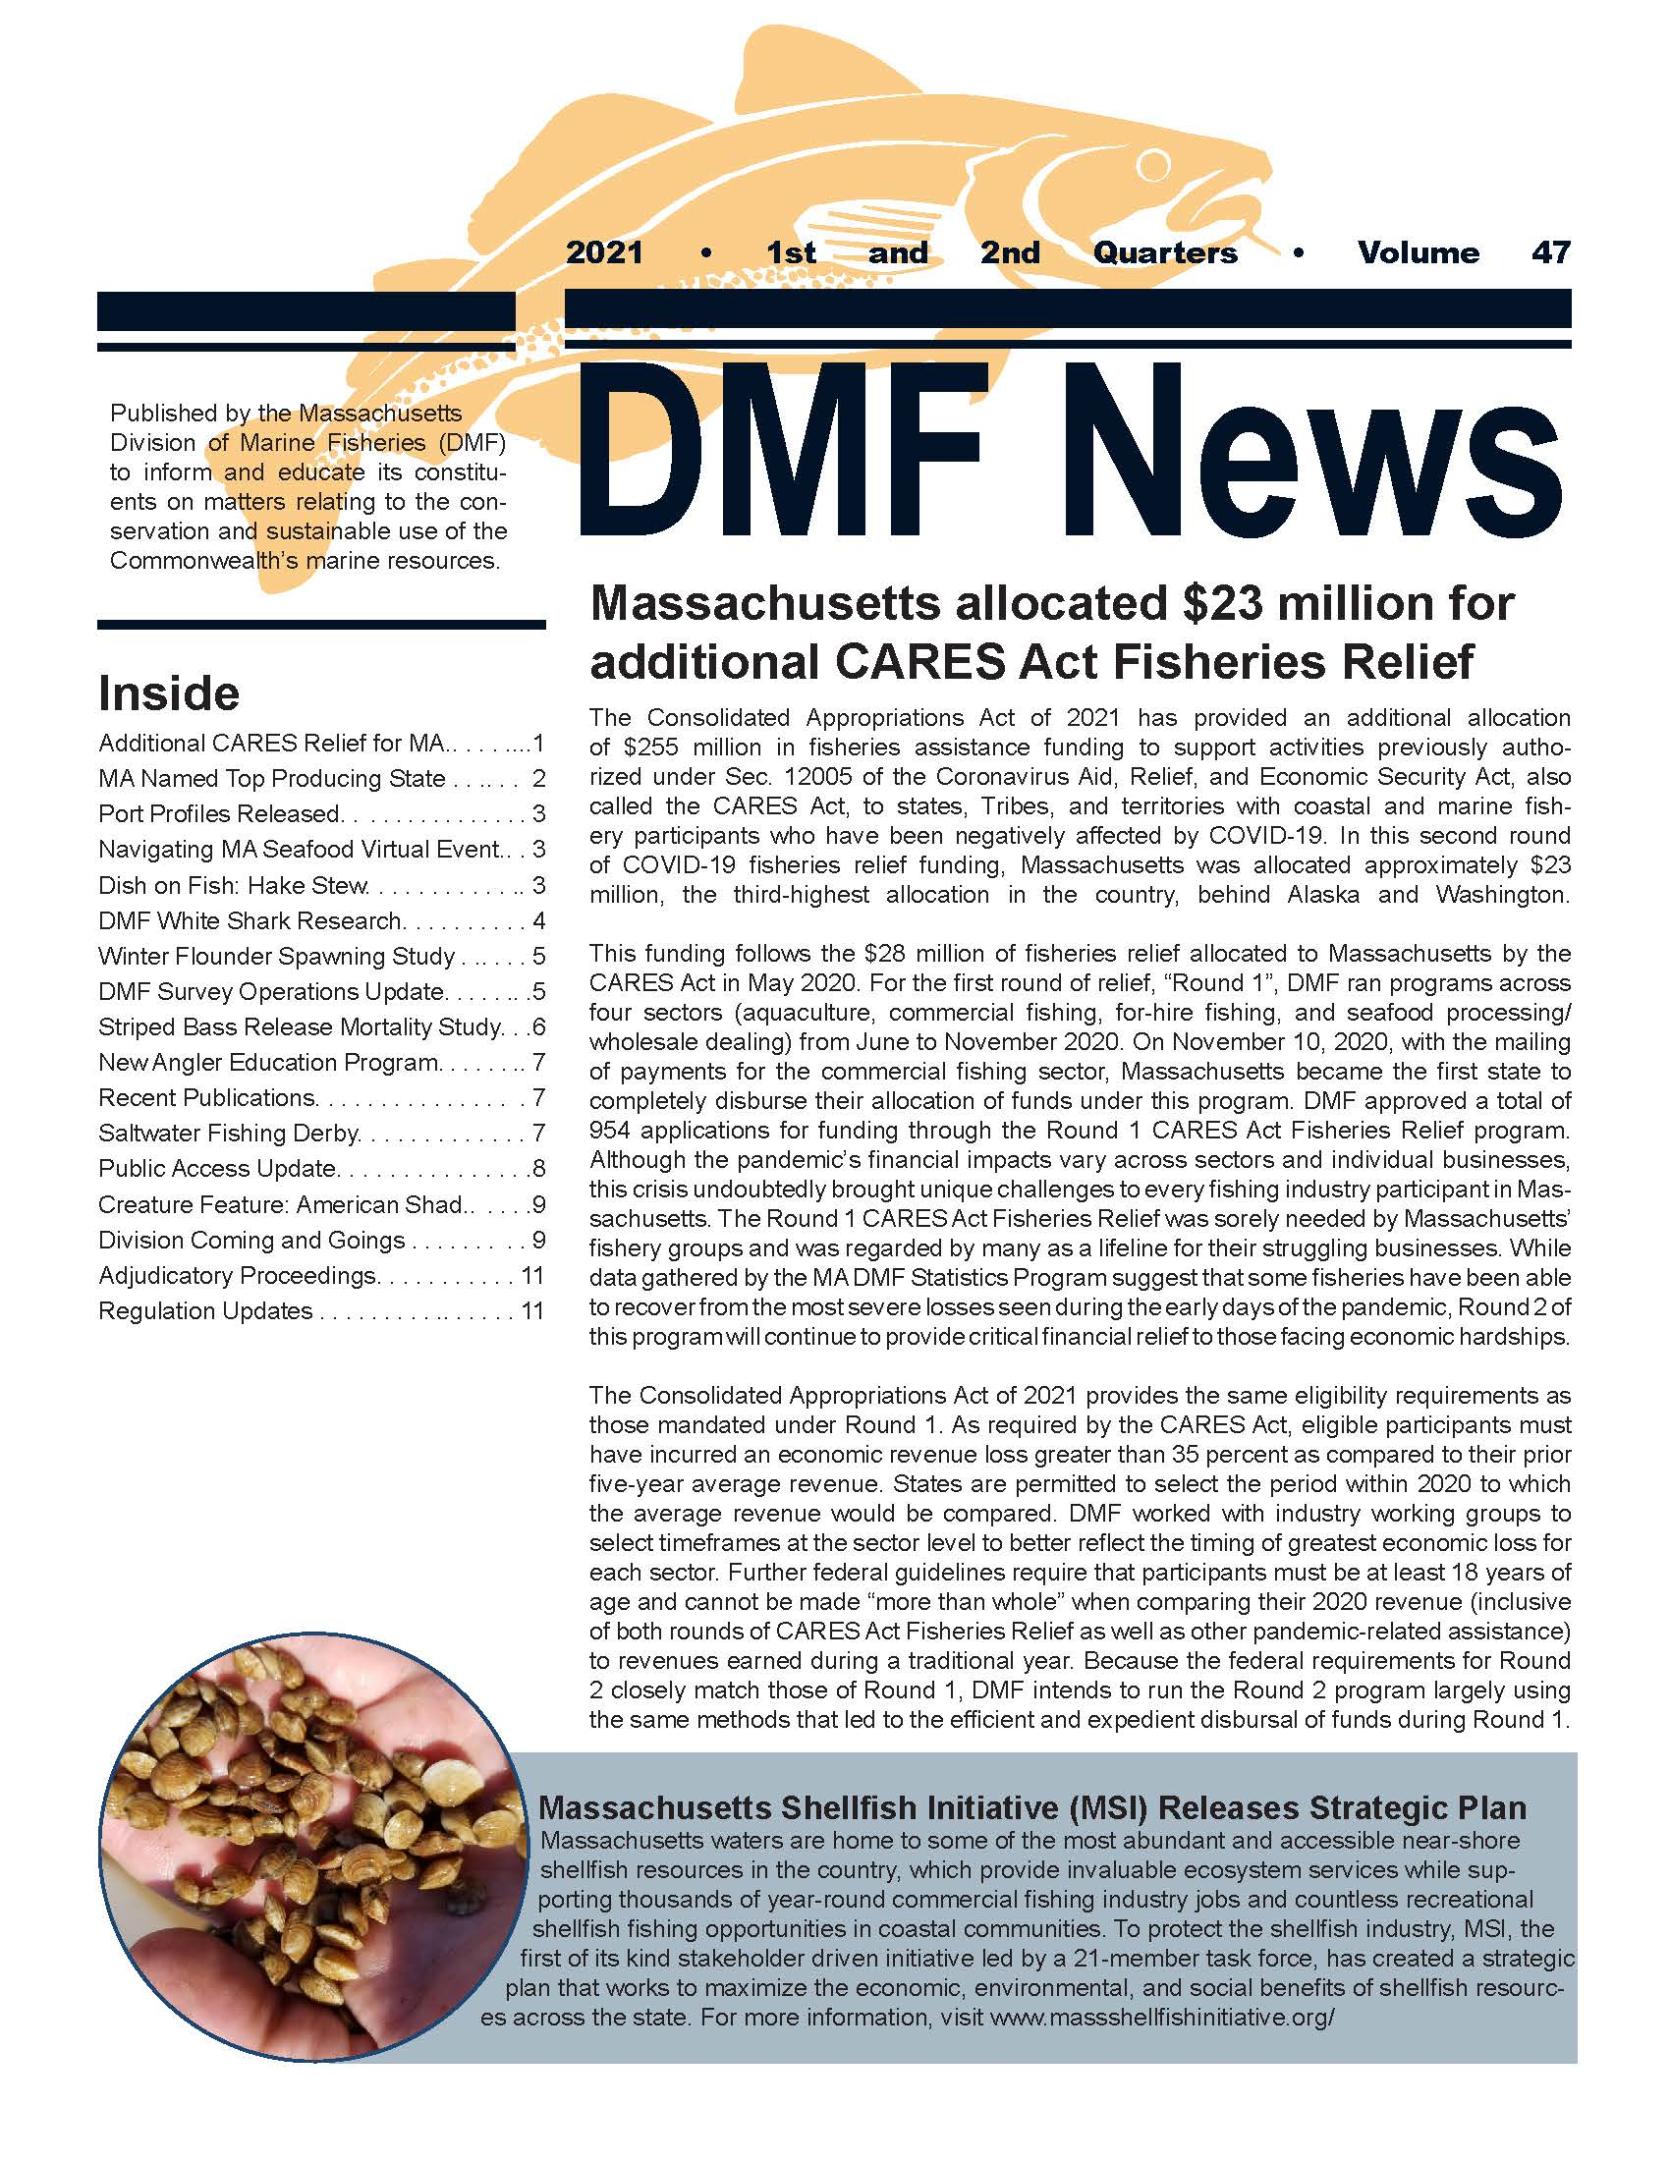 DMF News 2021 Q1 & Q2